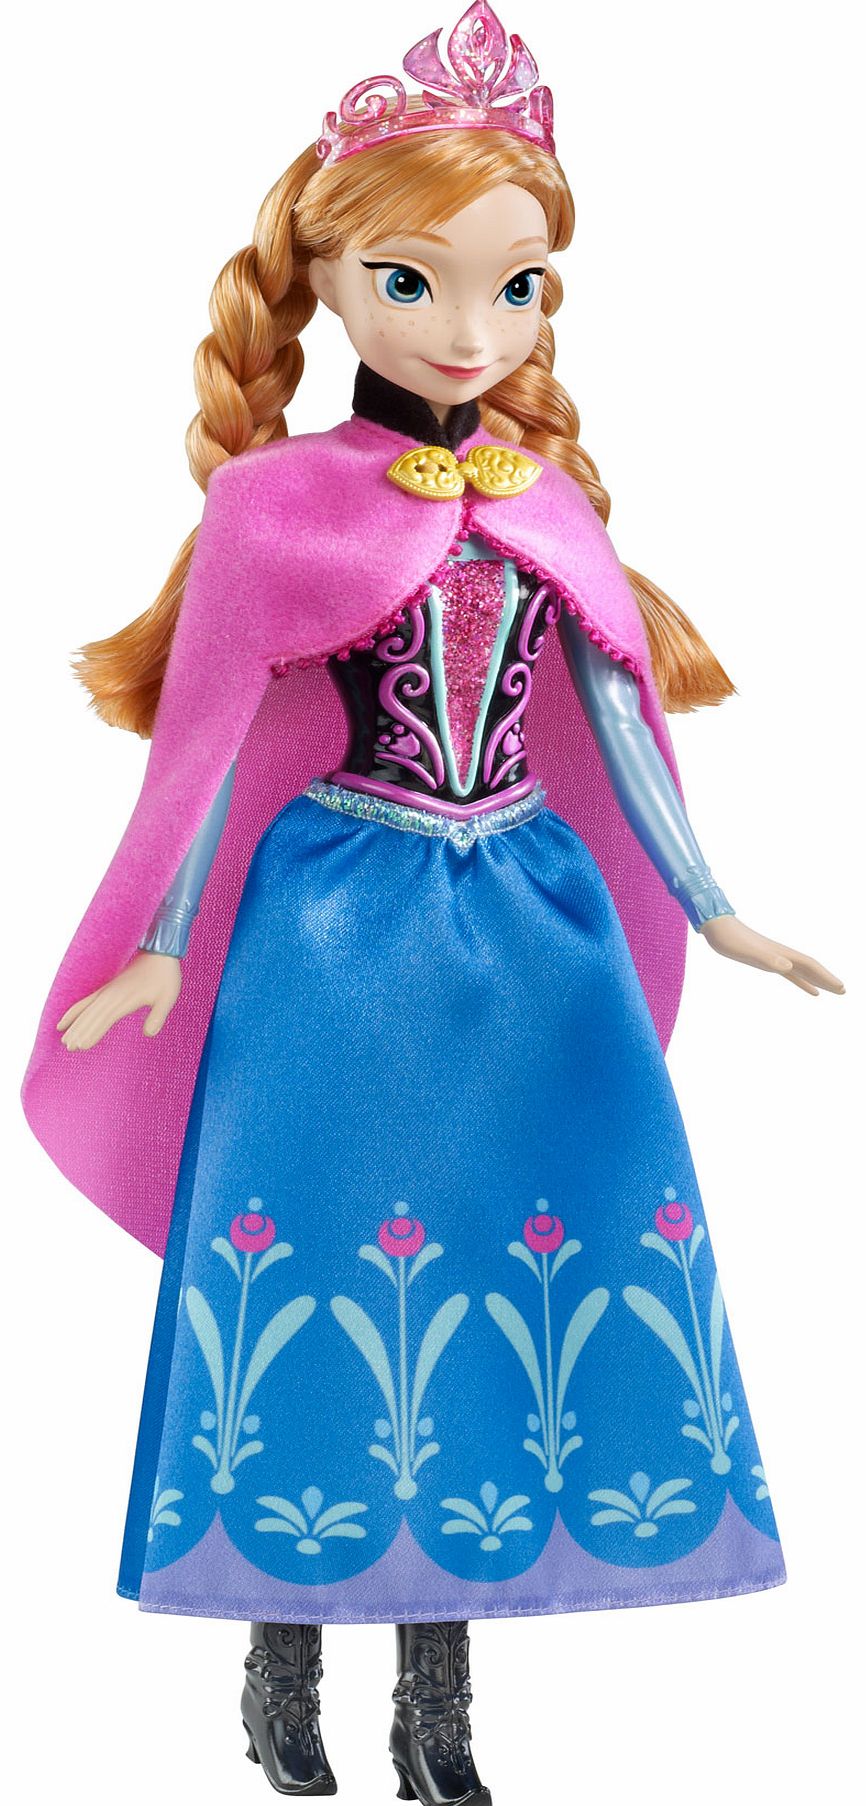 Disney Frozen Sparkle Anna Fashion Doll